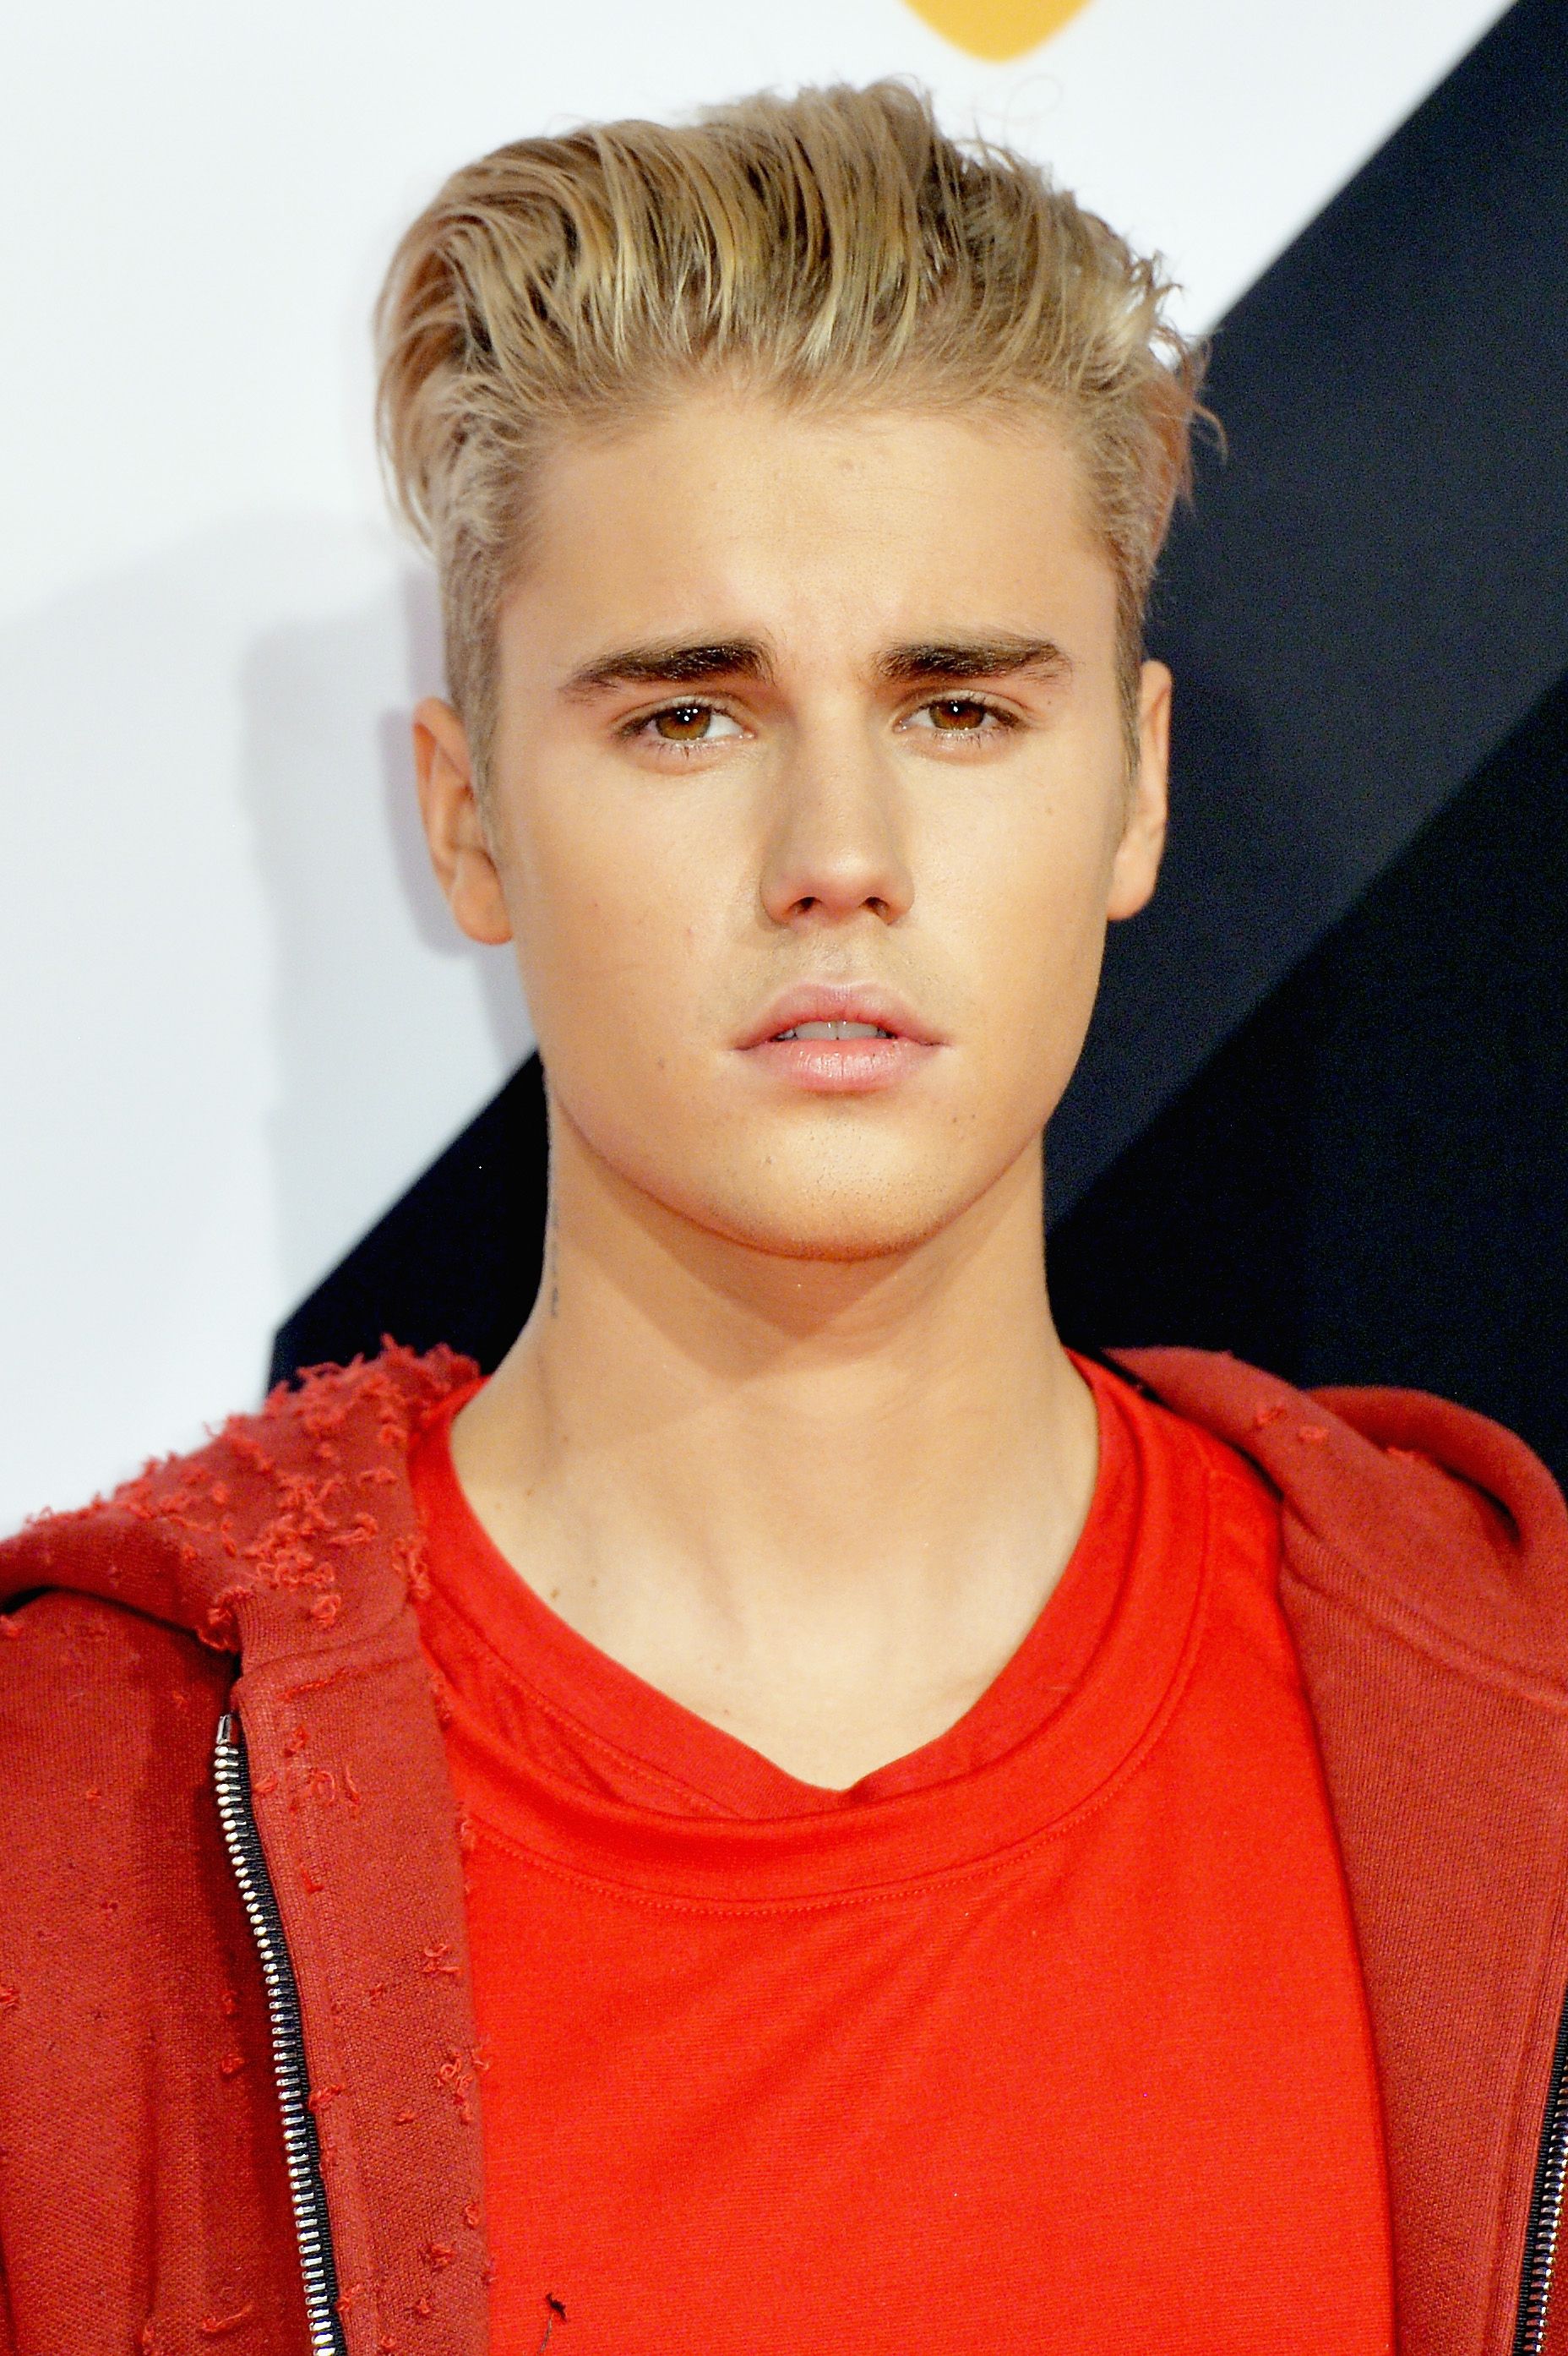 Justin Bieber attends the MTV EMAs 2015 13